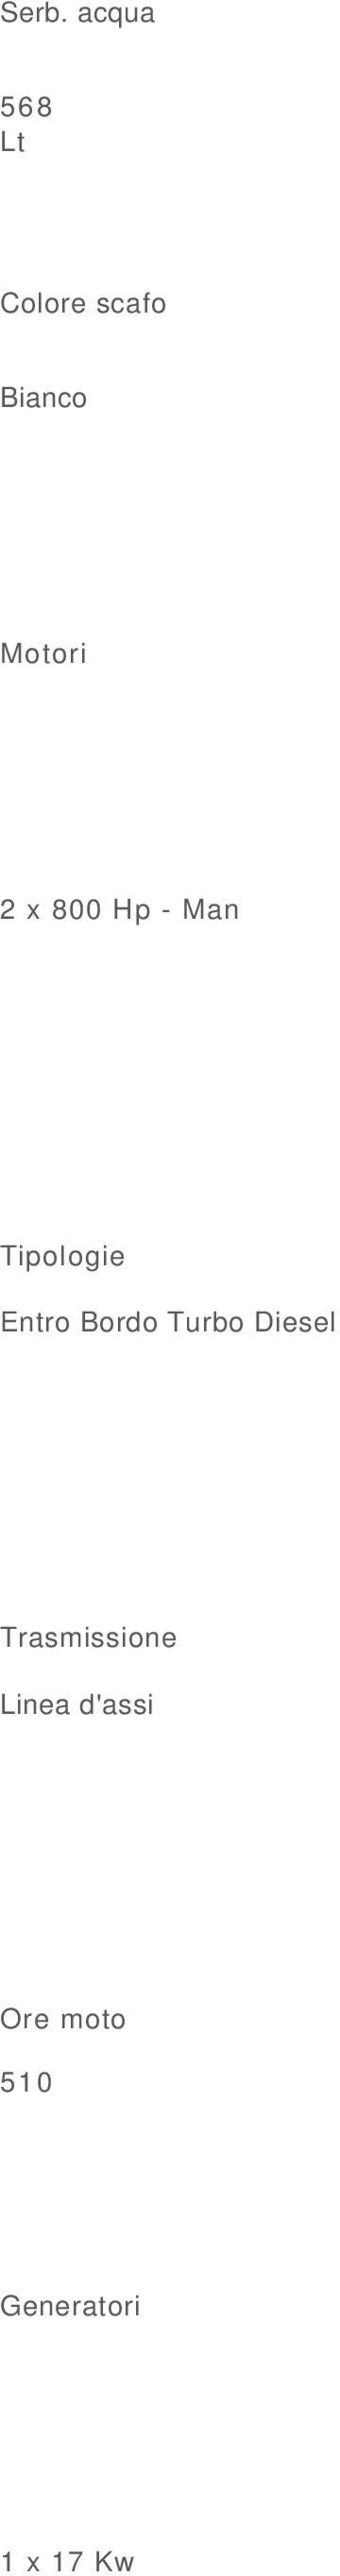 Bordo Turbo Diesel Trasmissione Linea